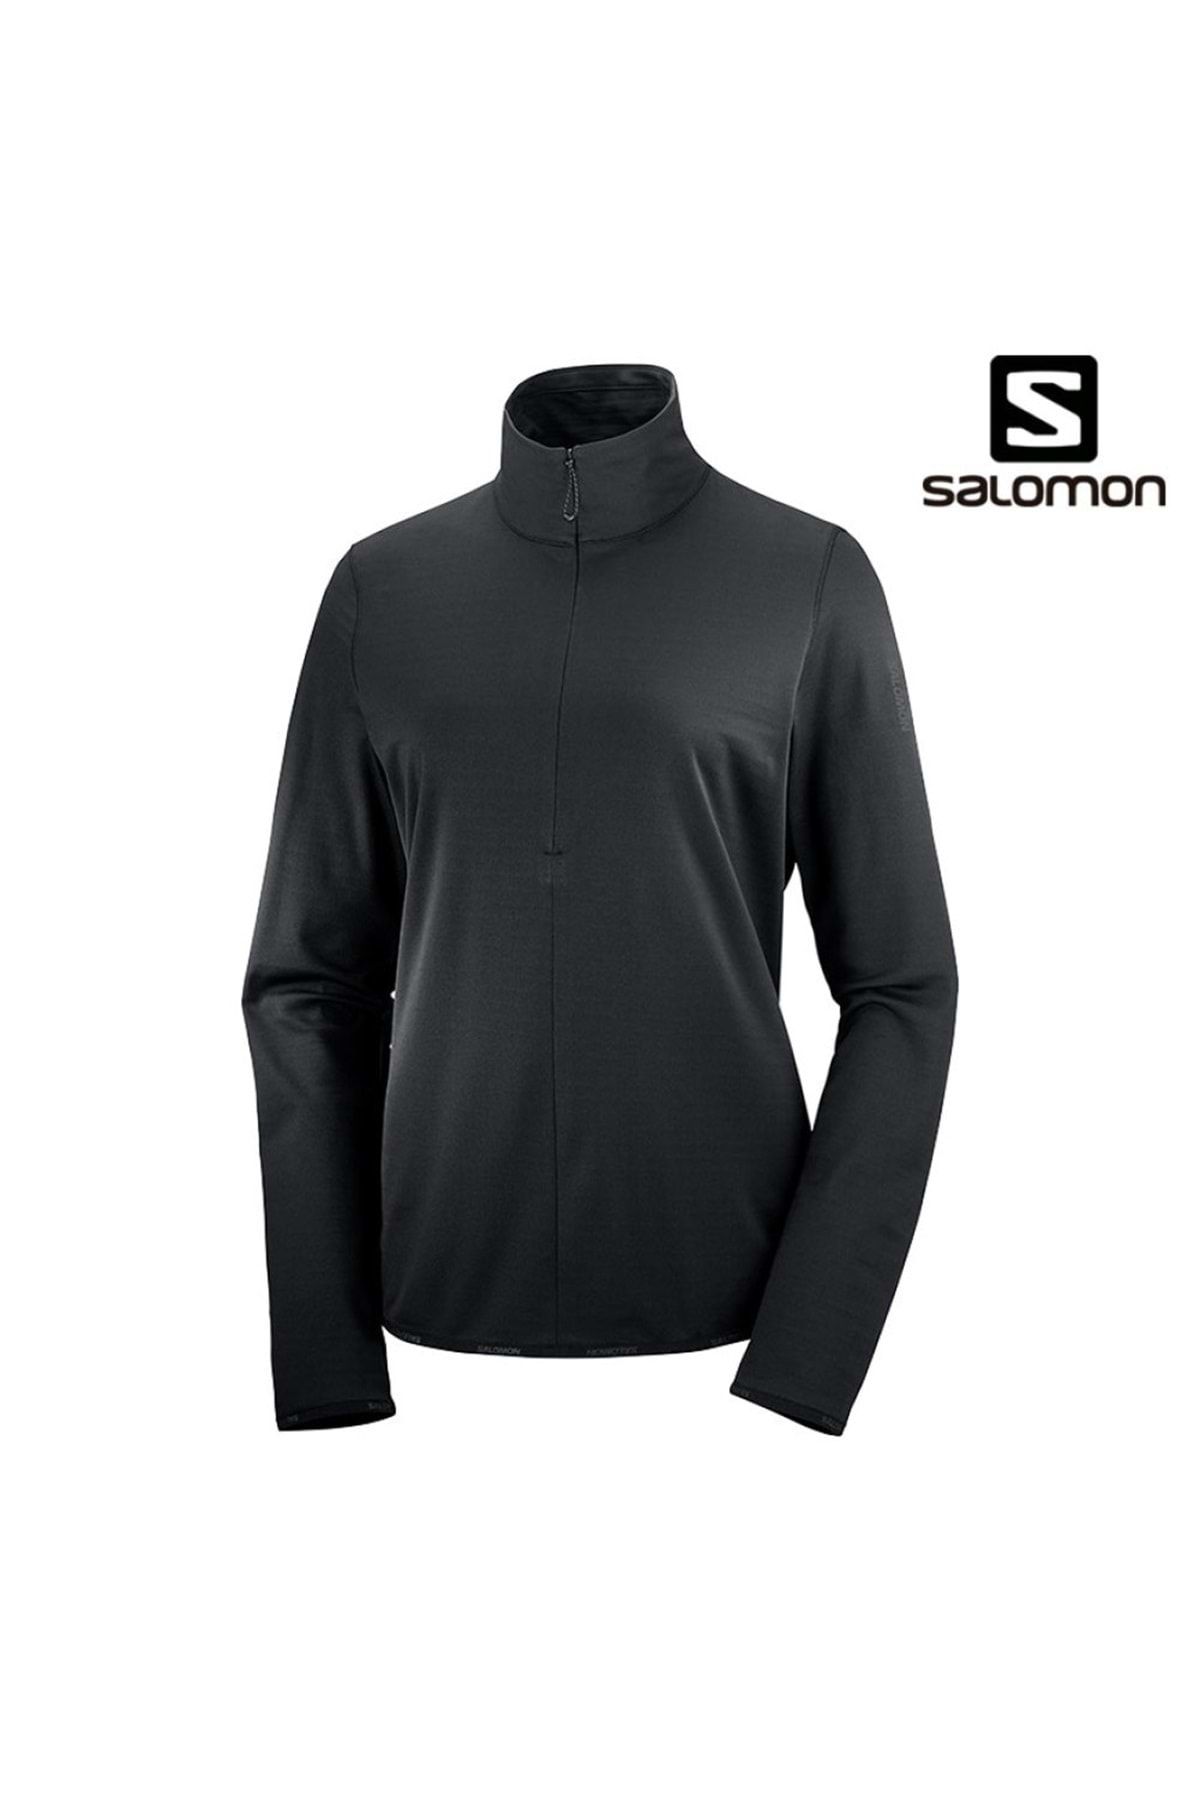 Salomon Outrack Half Zip Mid W Midlayer Lc1862300 Kadın Sweatshirt